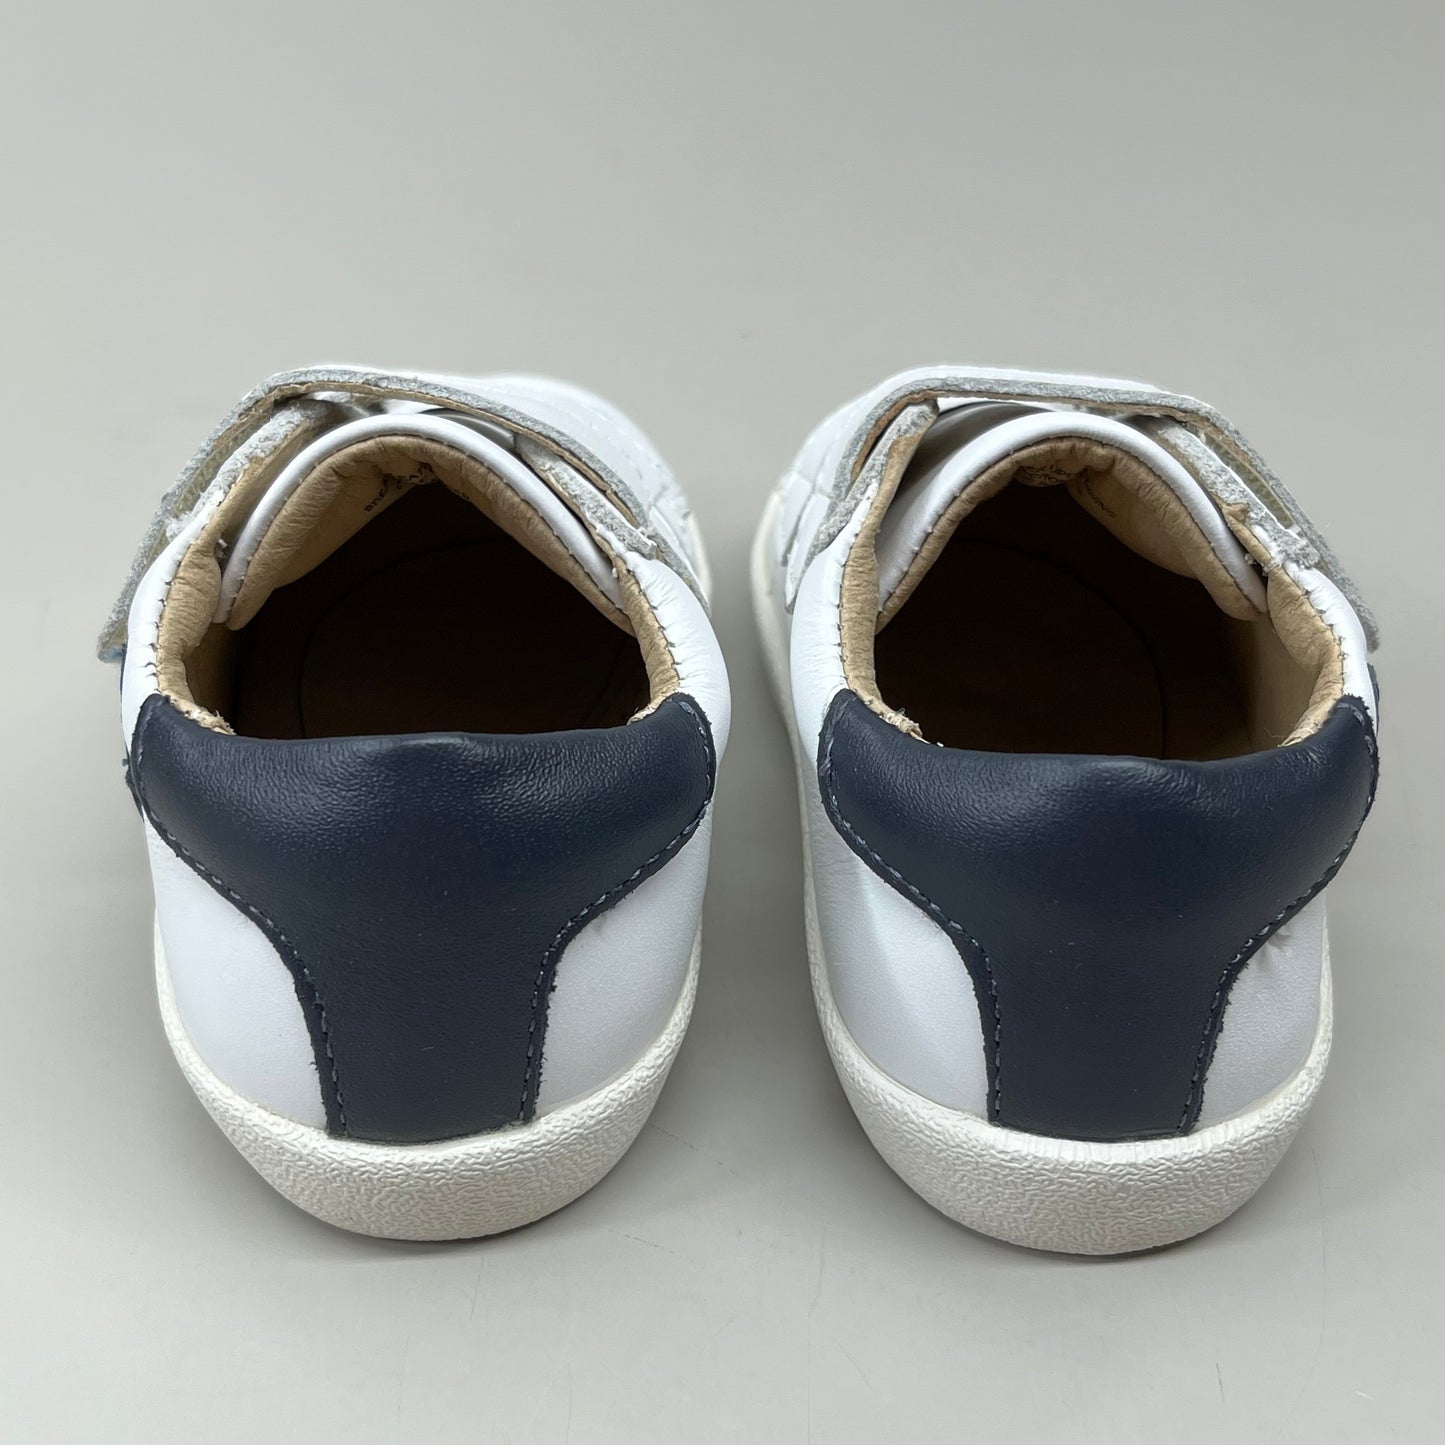 OLD SOLES Fullhouse Boys & Girls Leather Shoes Kid's Sz 6 EU 22 Snow / Indigo / Navy #5082